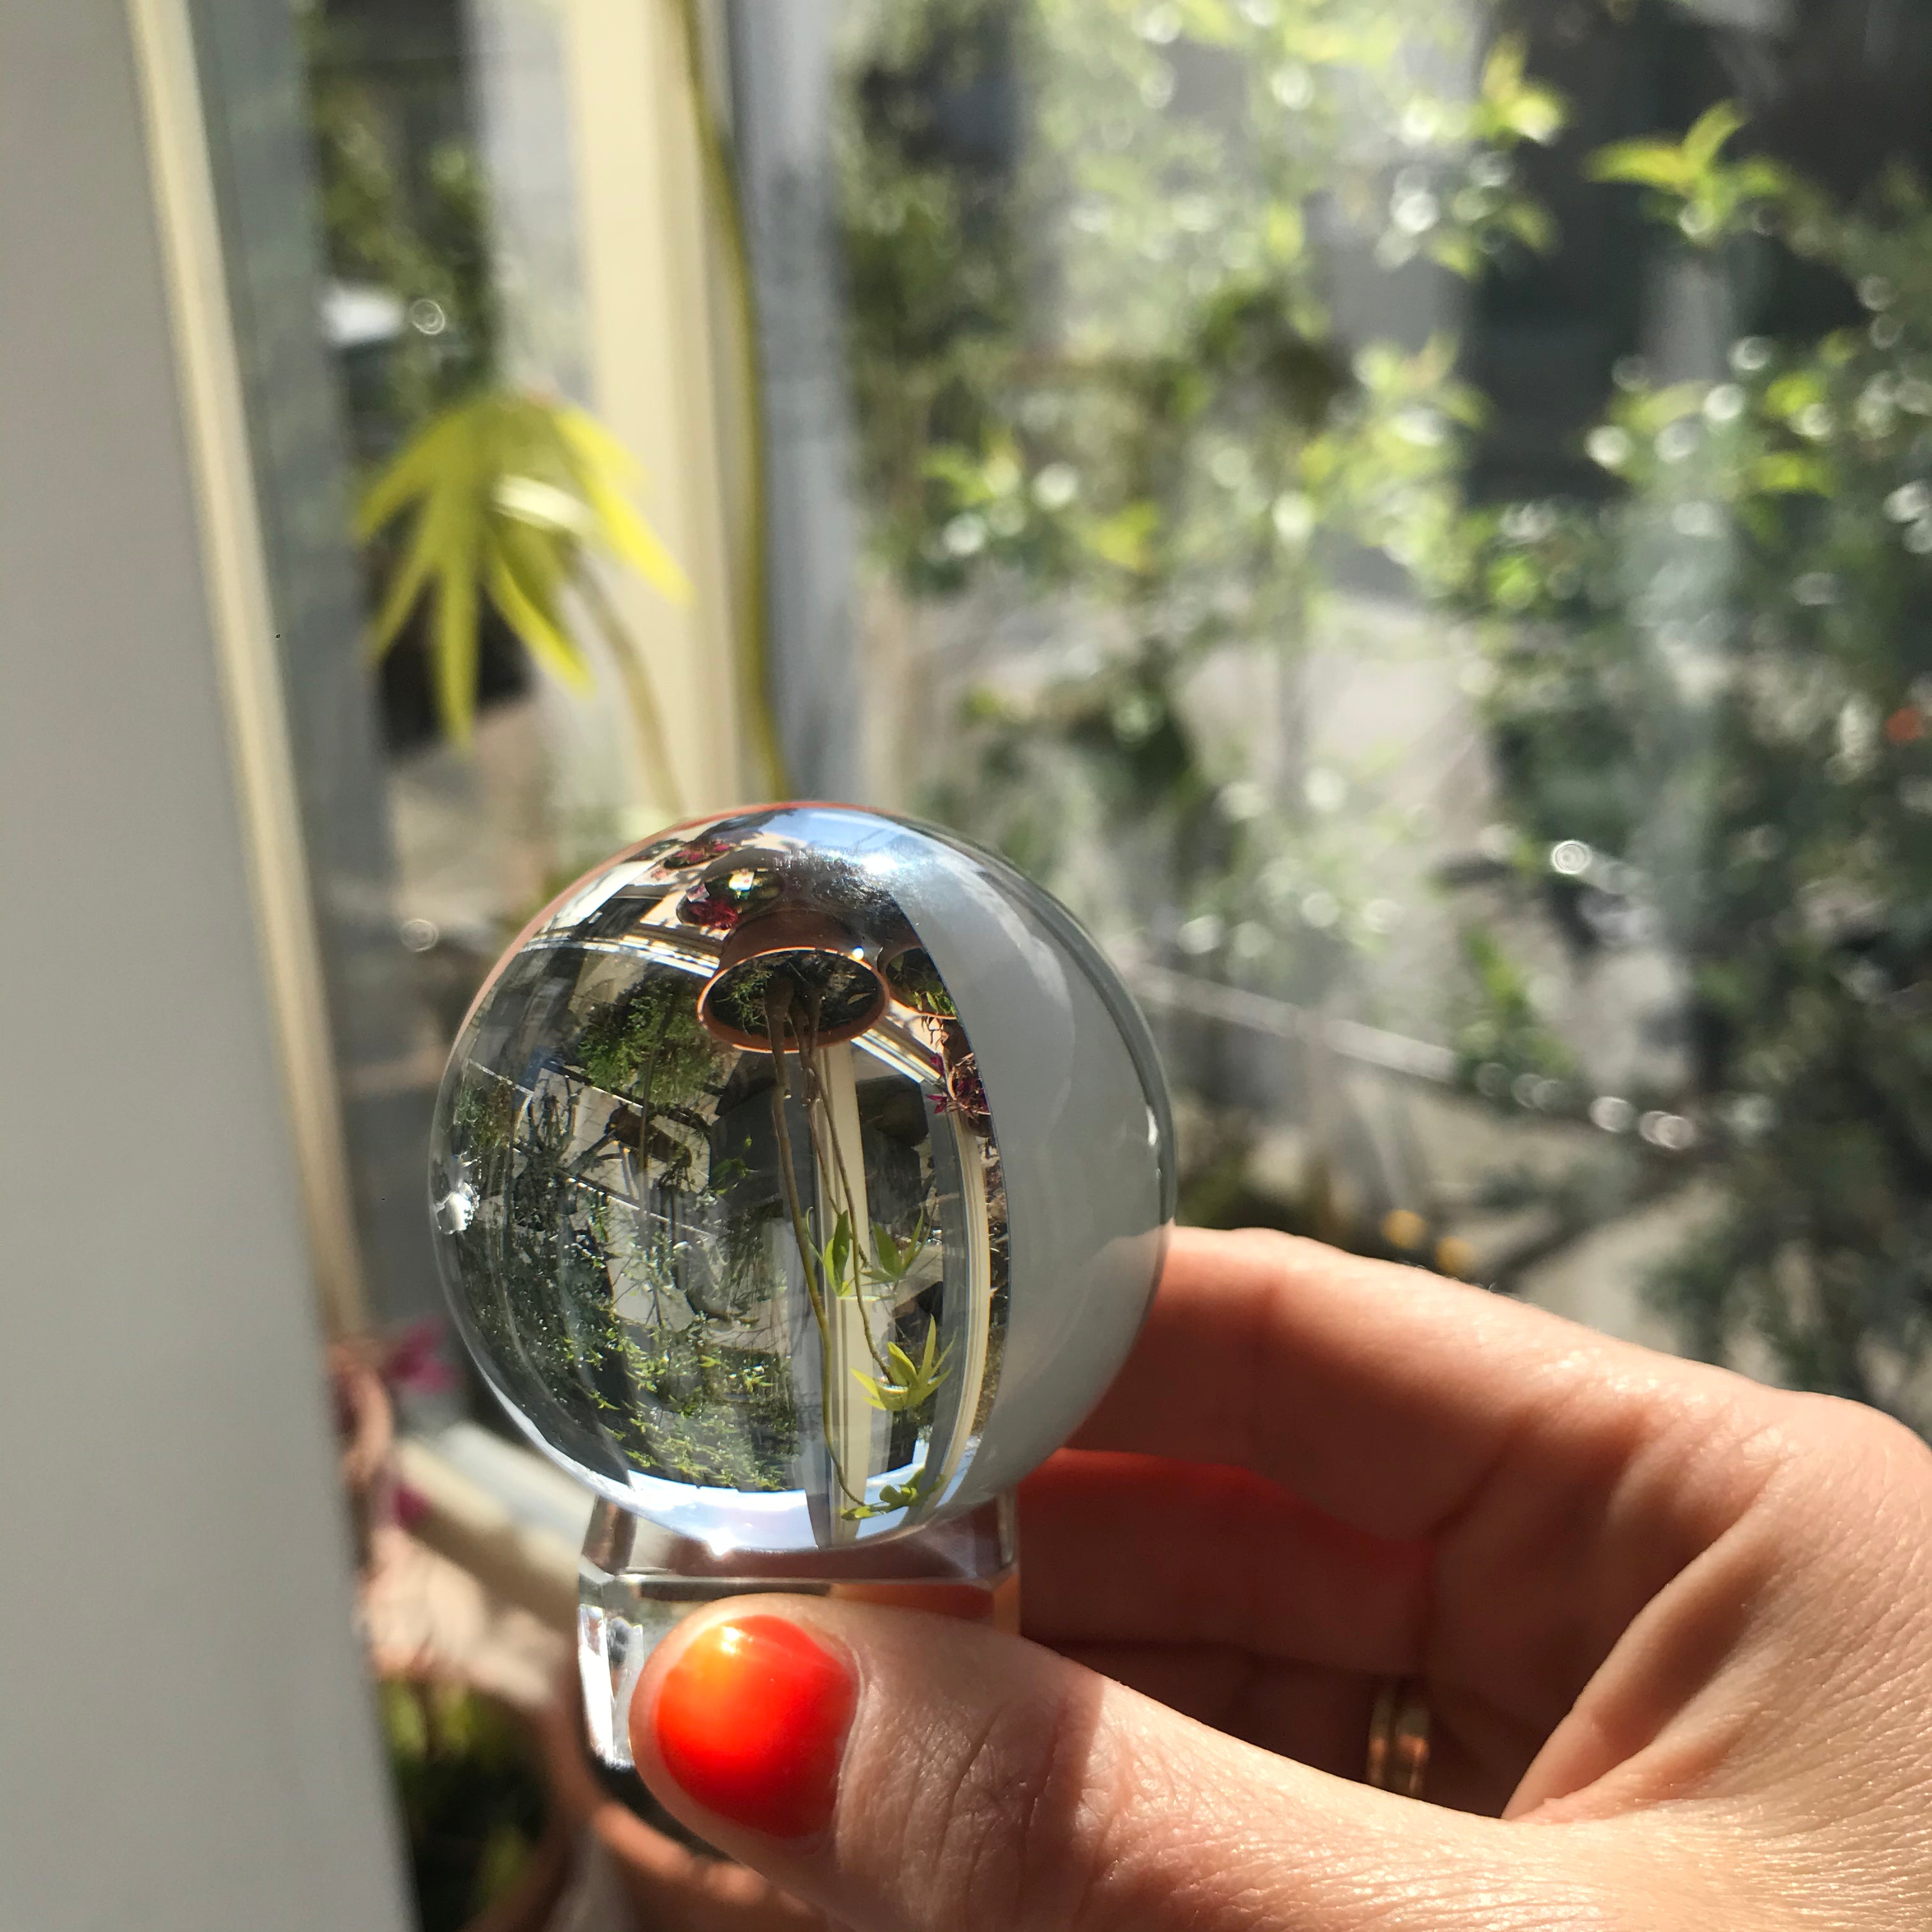 Big glass prisma ball